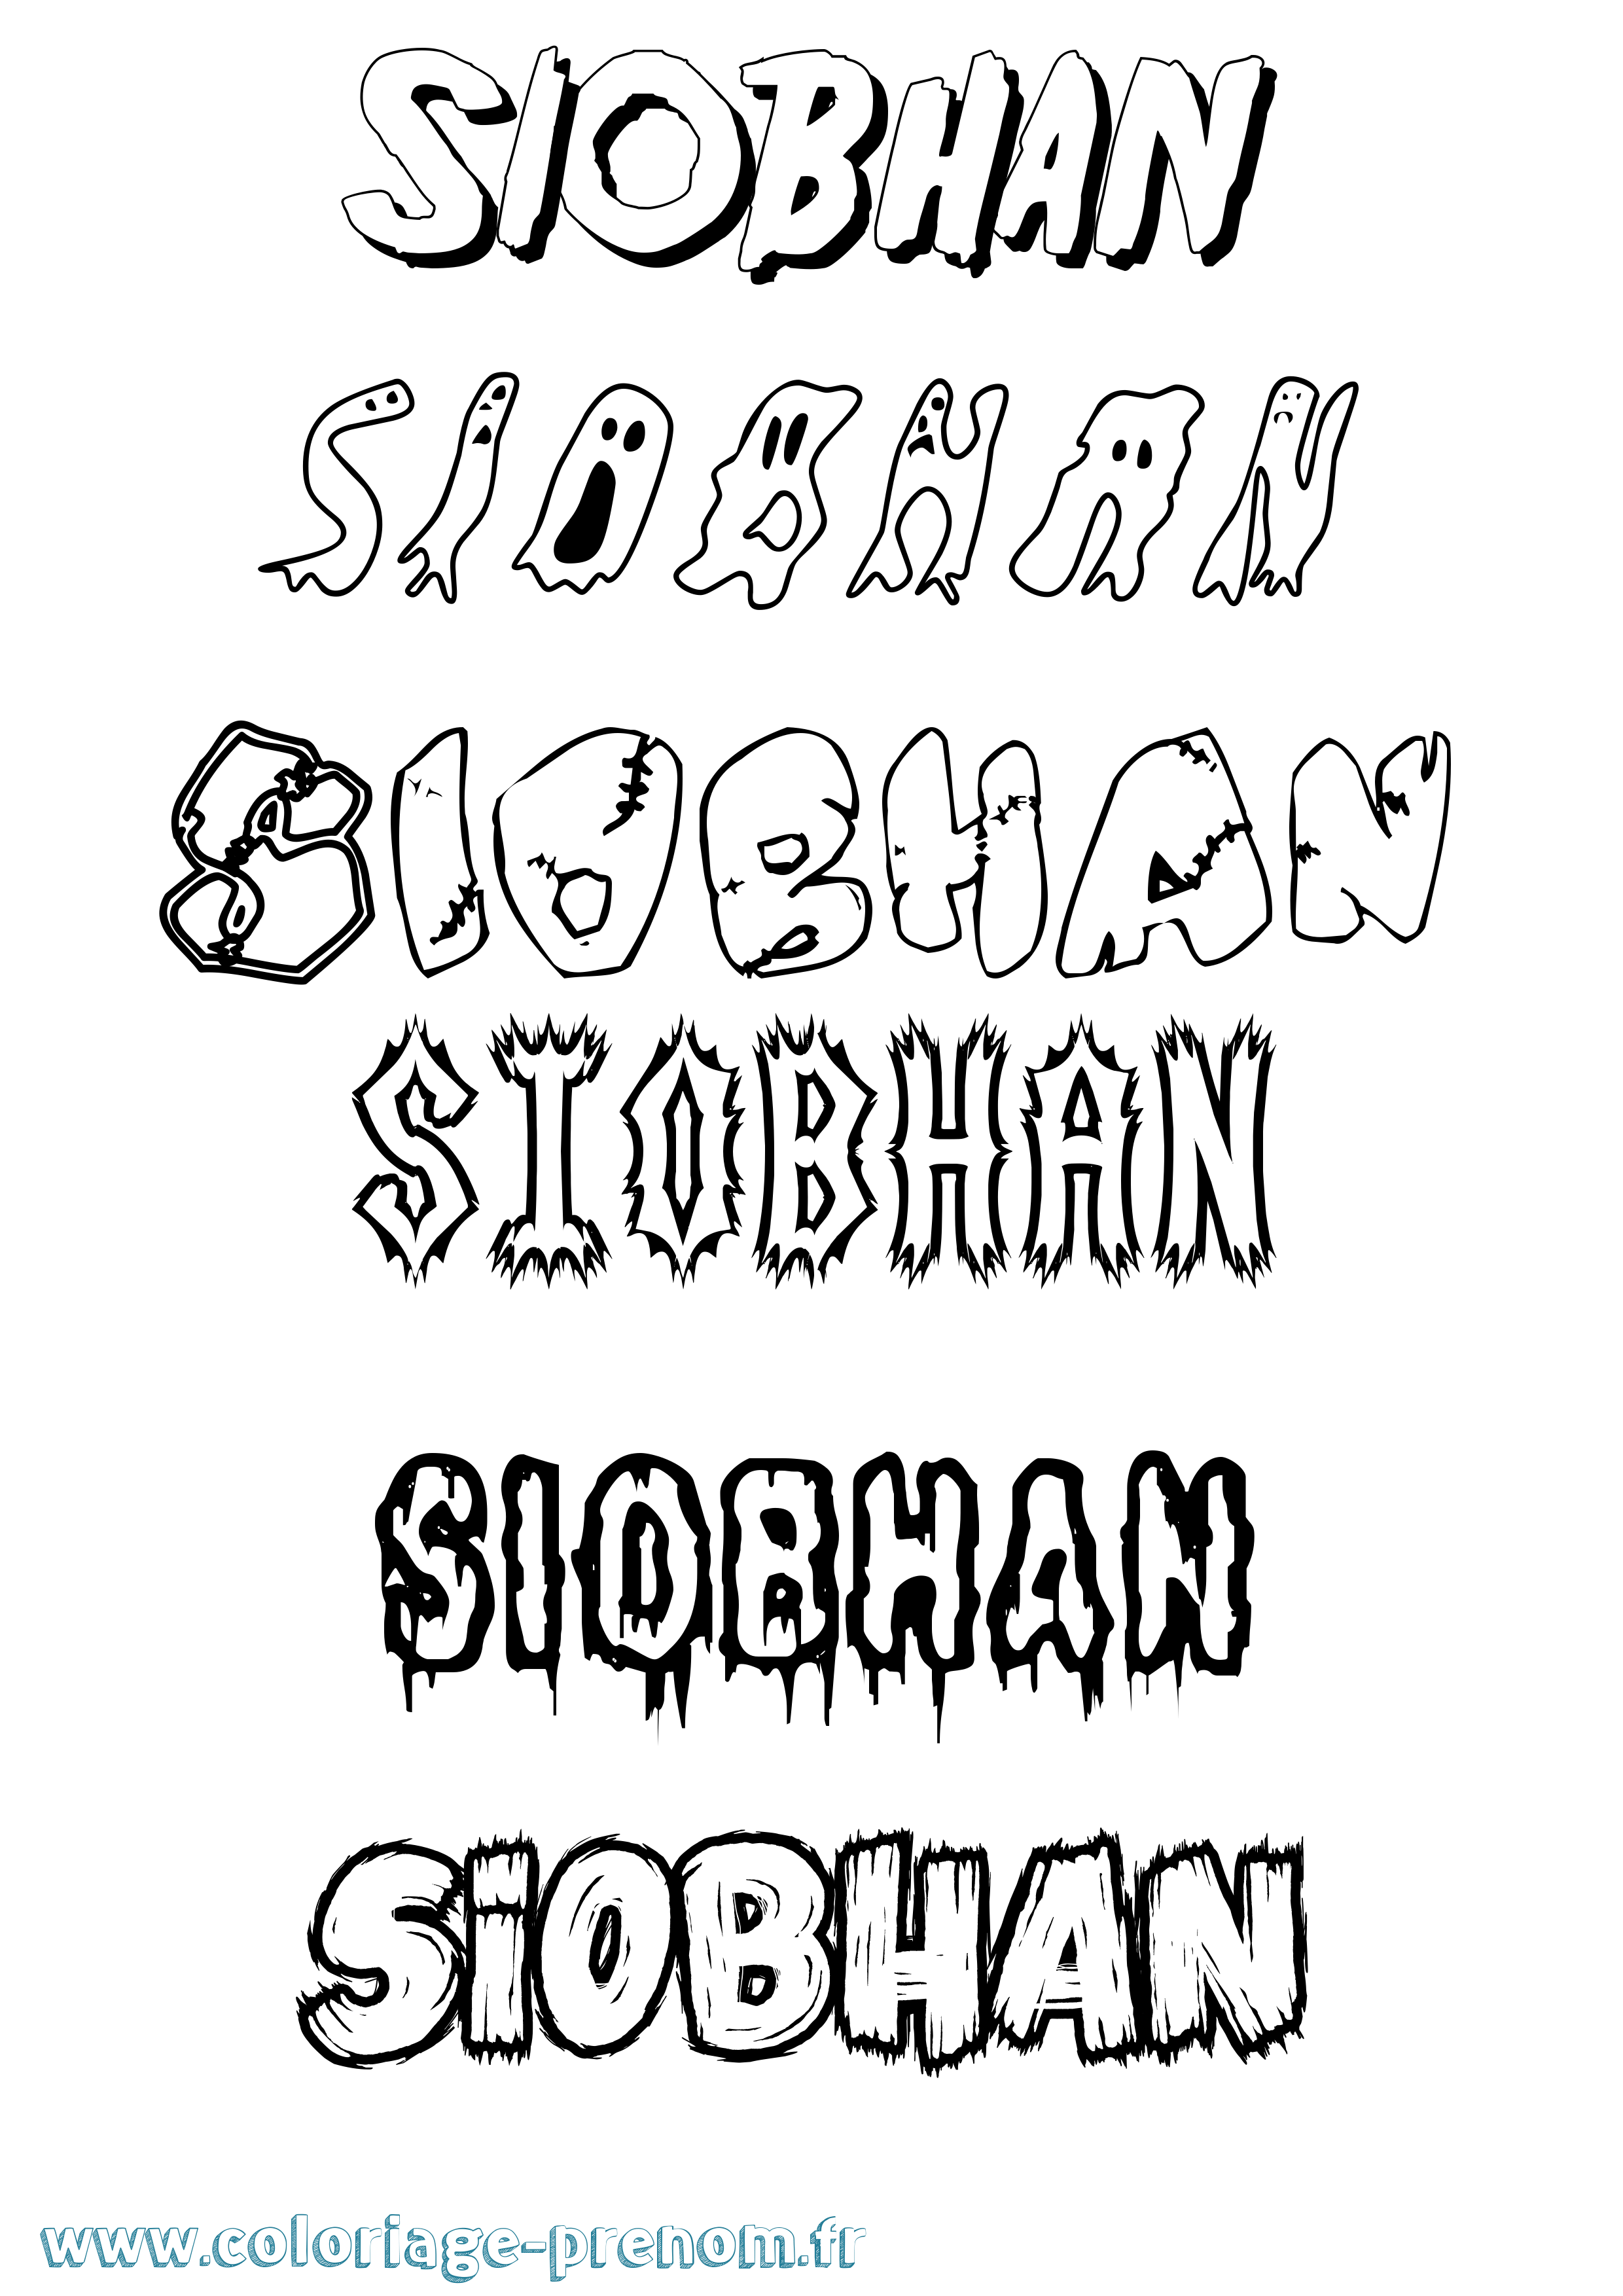 Coloriage prénom Siobhan Frisson